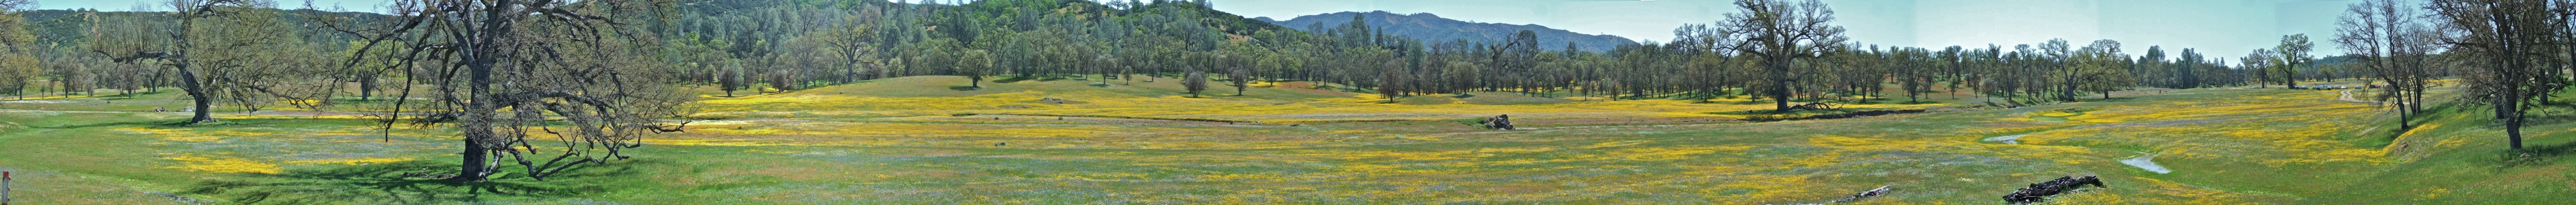 Upper San Antonio Valley wildflowers - 4/2010